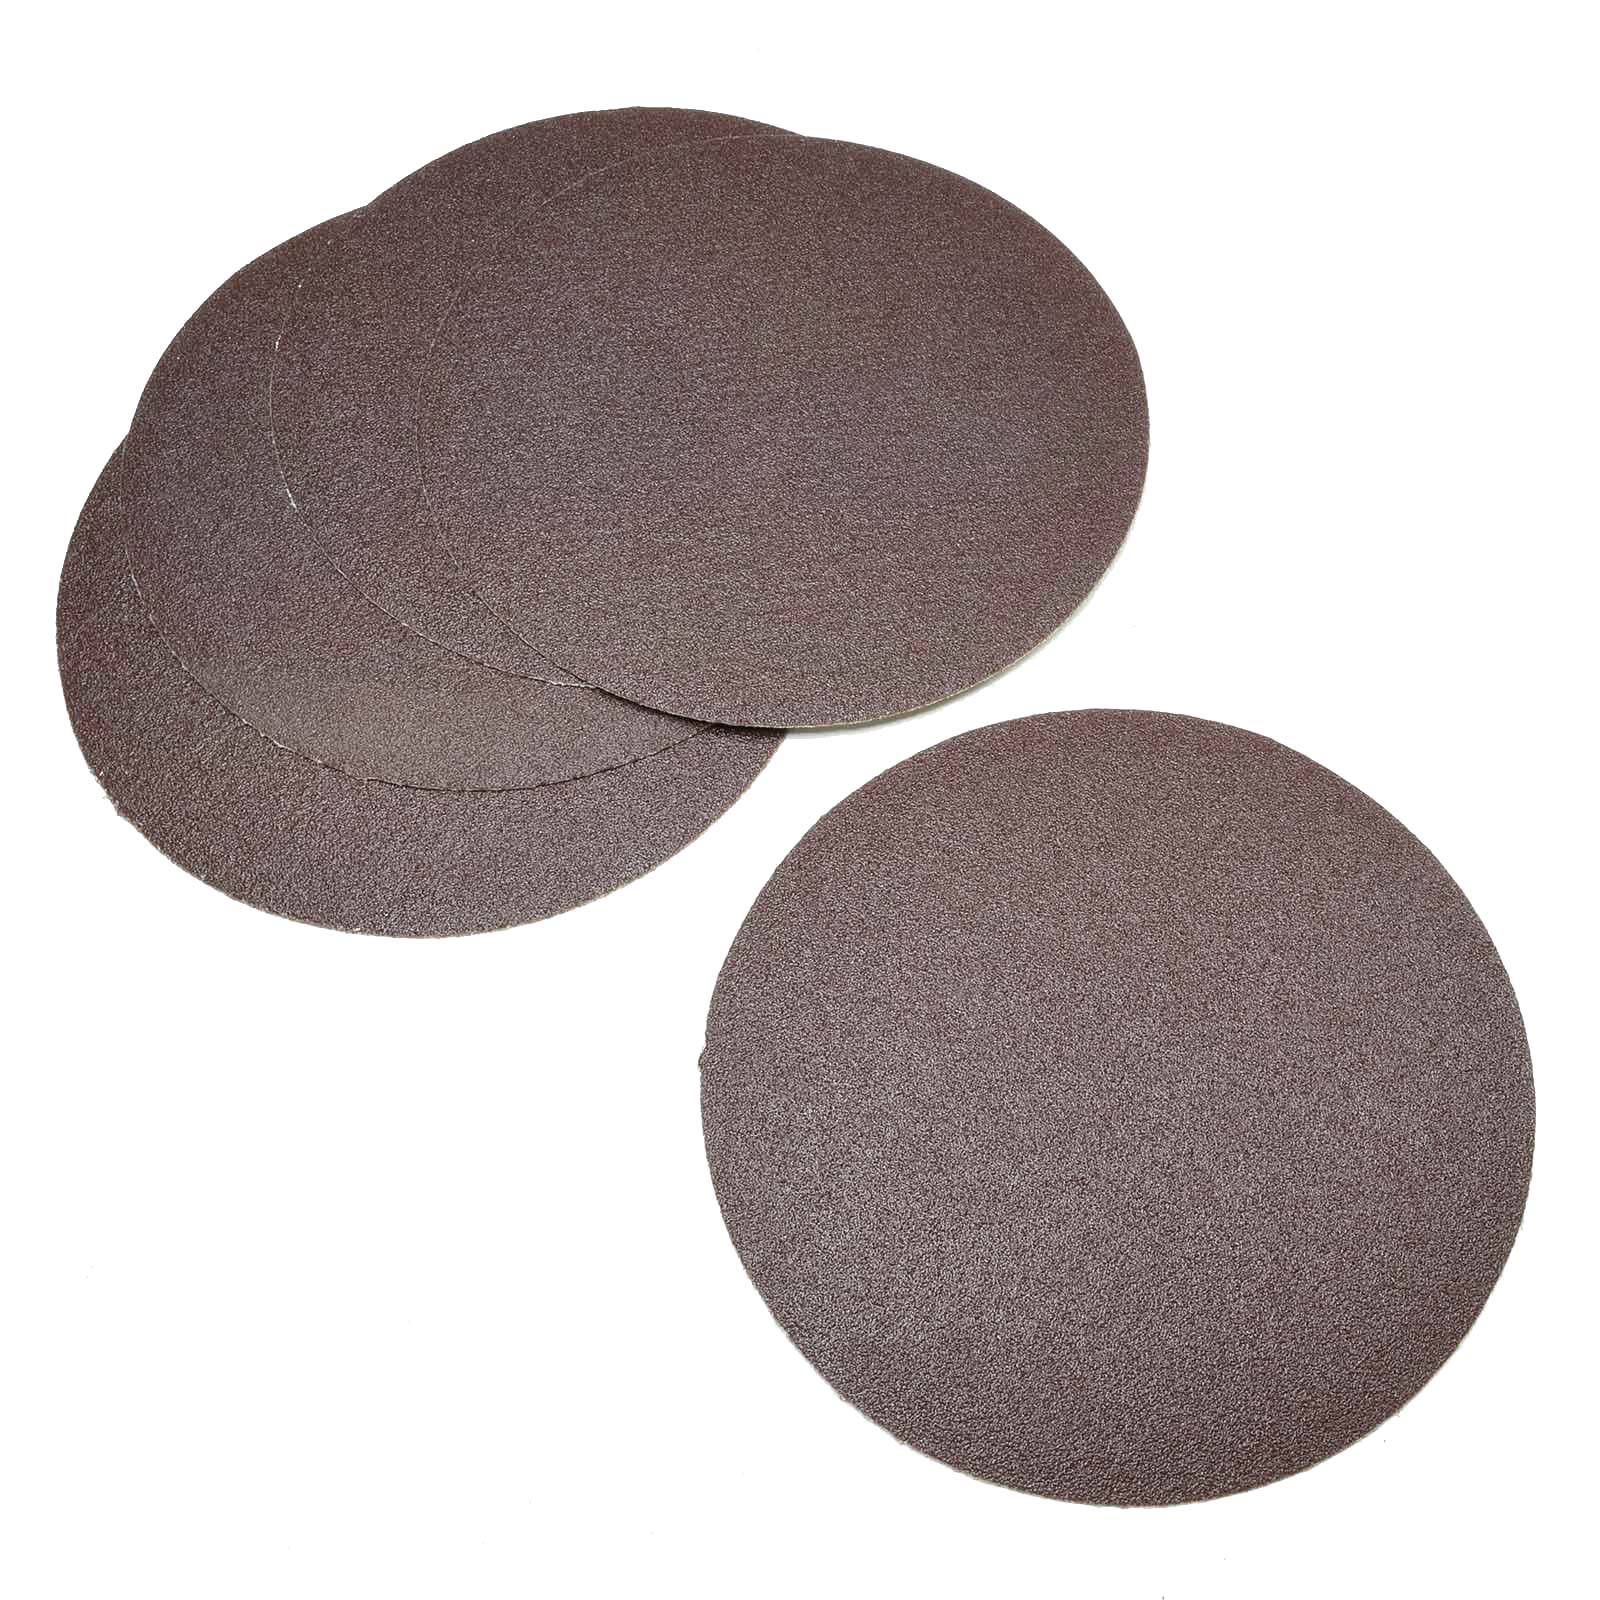 5" Sanding Disk, 120 Grit, Package of 5 - Micro - Mark Sandpaper & Sanding Sponges